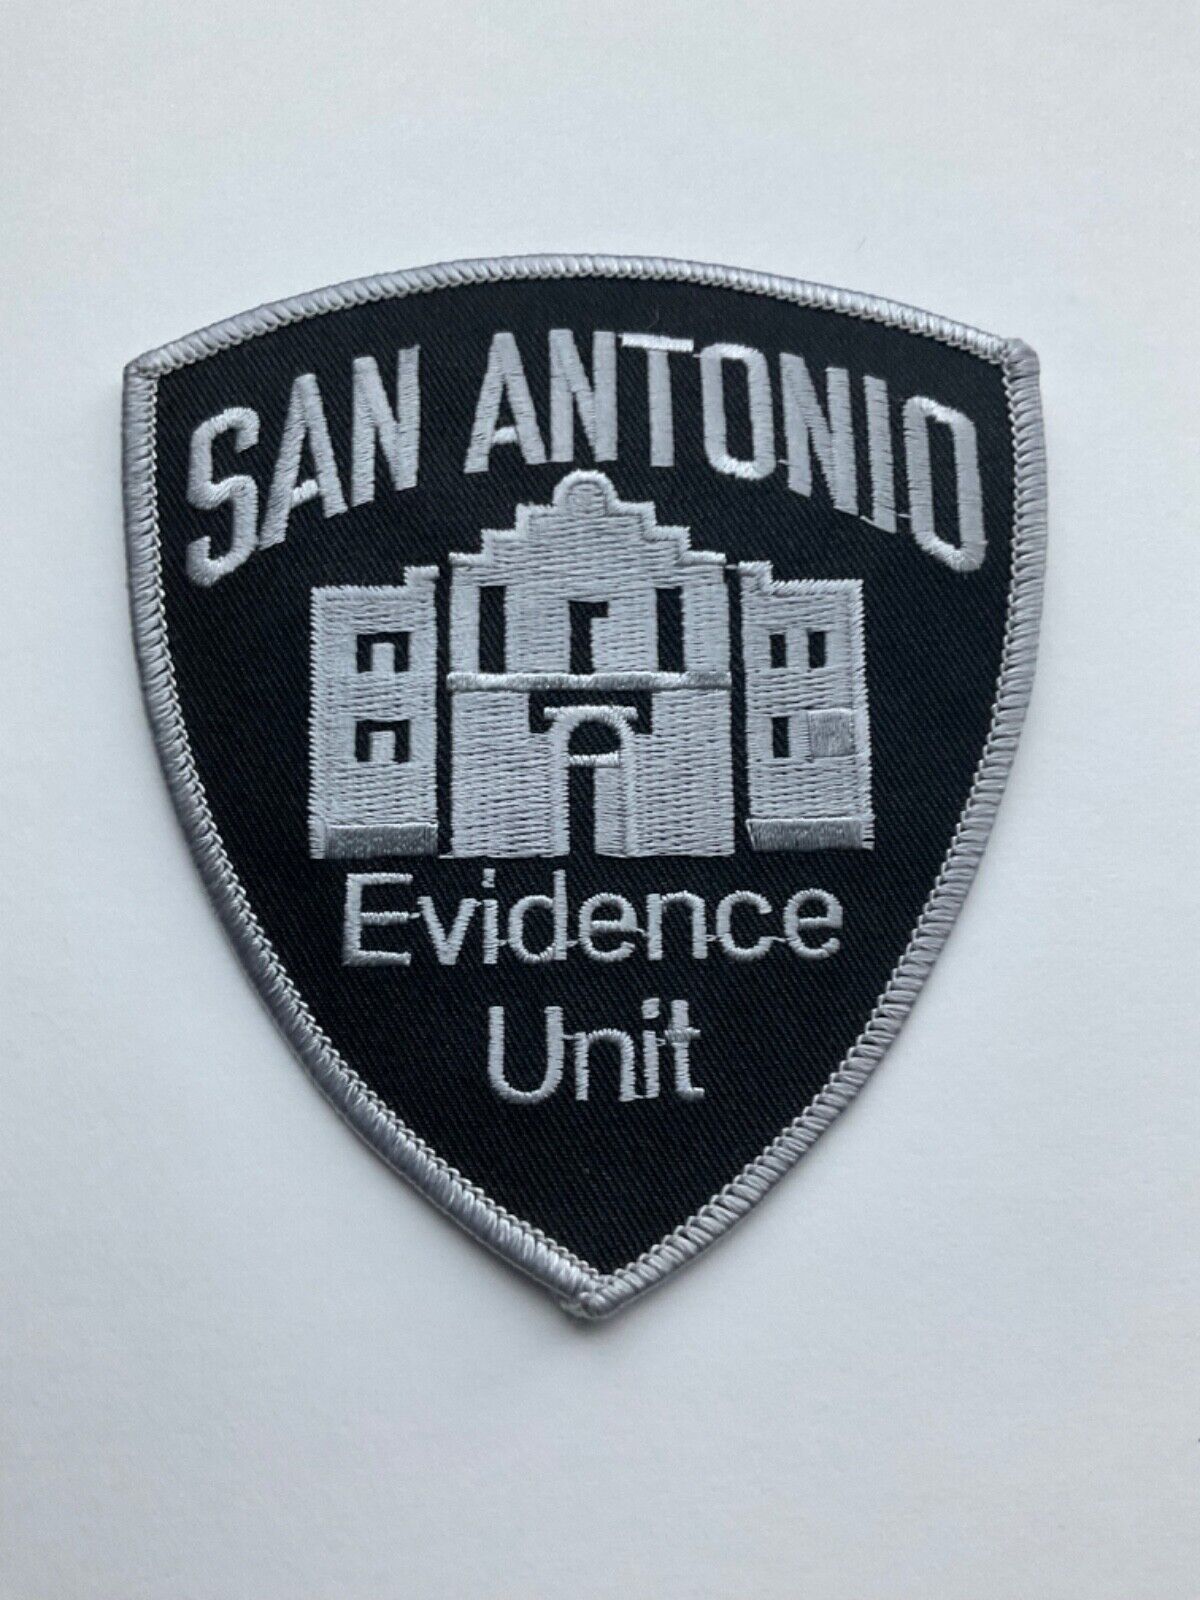 Evidence Unit  San Antonio Police State Texas TX